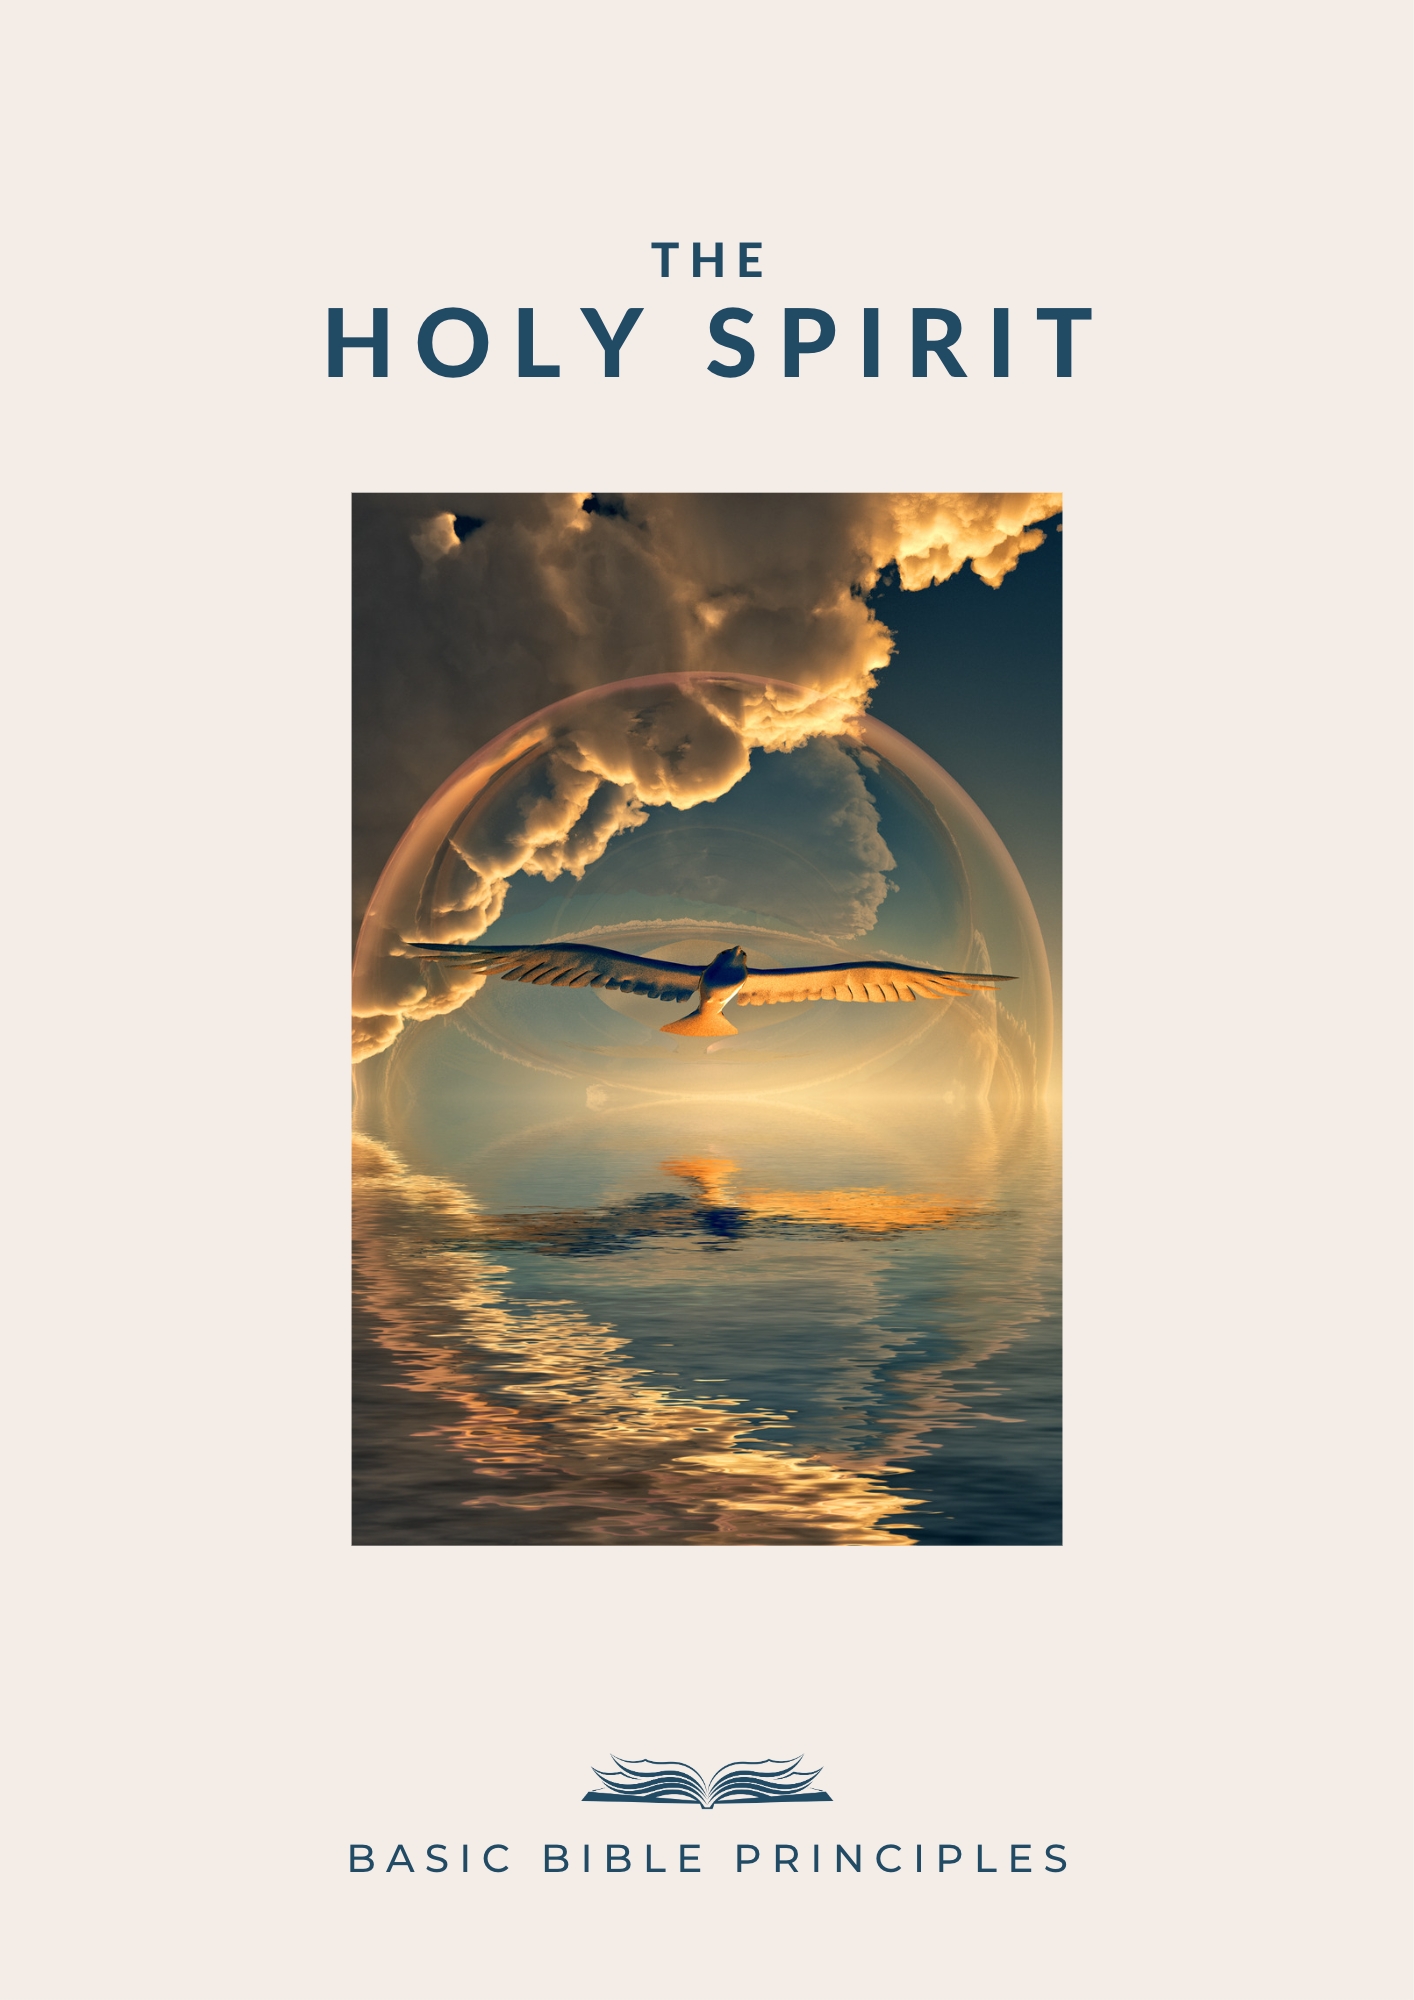 Basic Bible Principles: THE HOLY SPIRIT